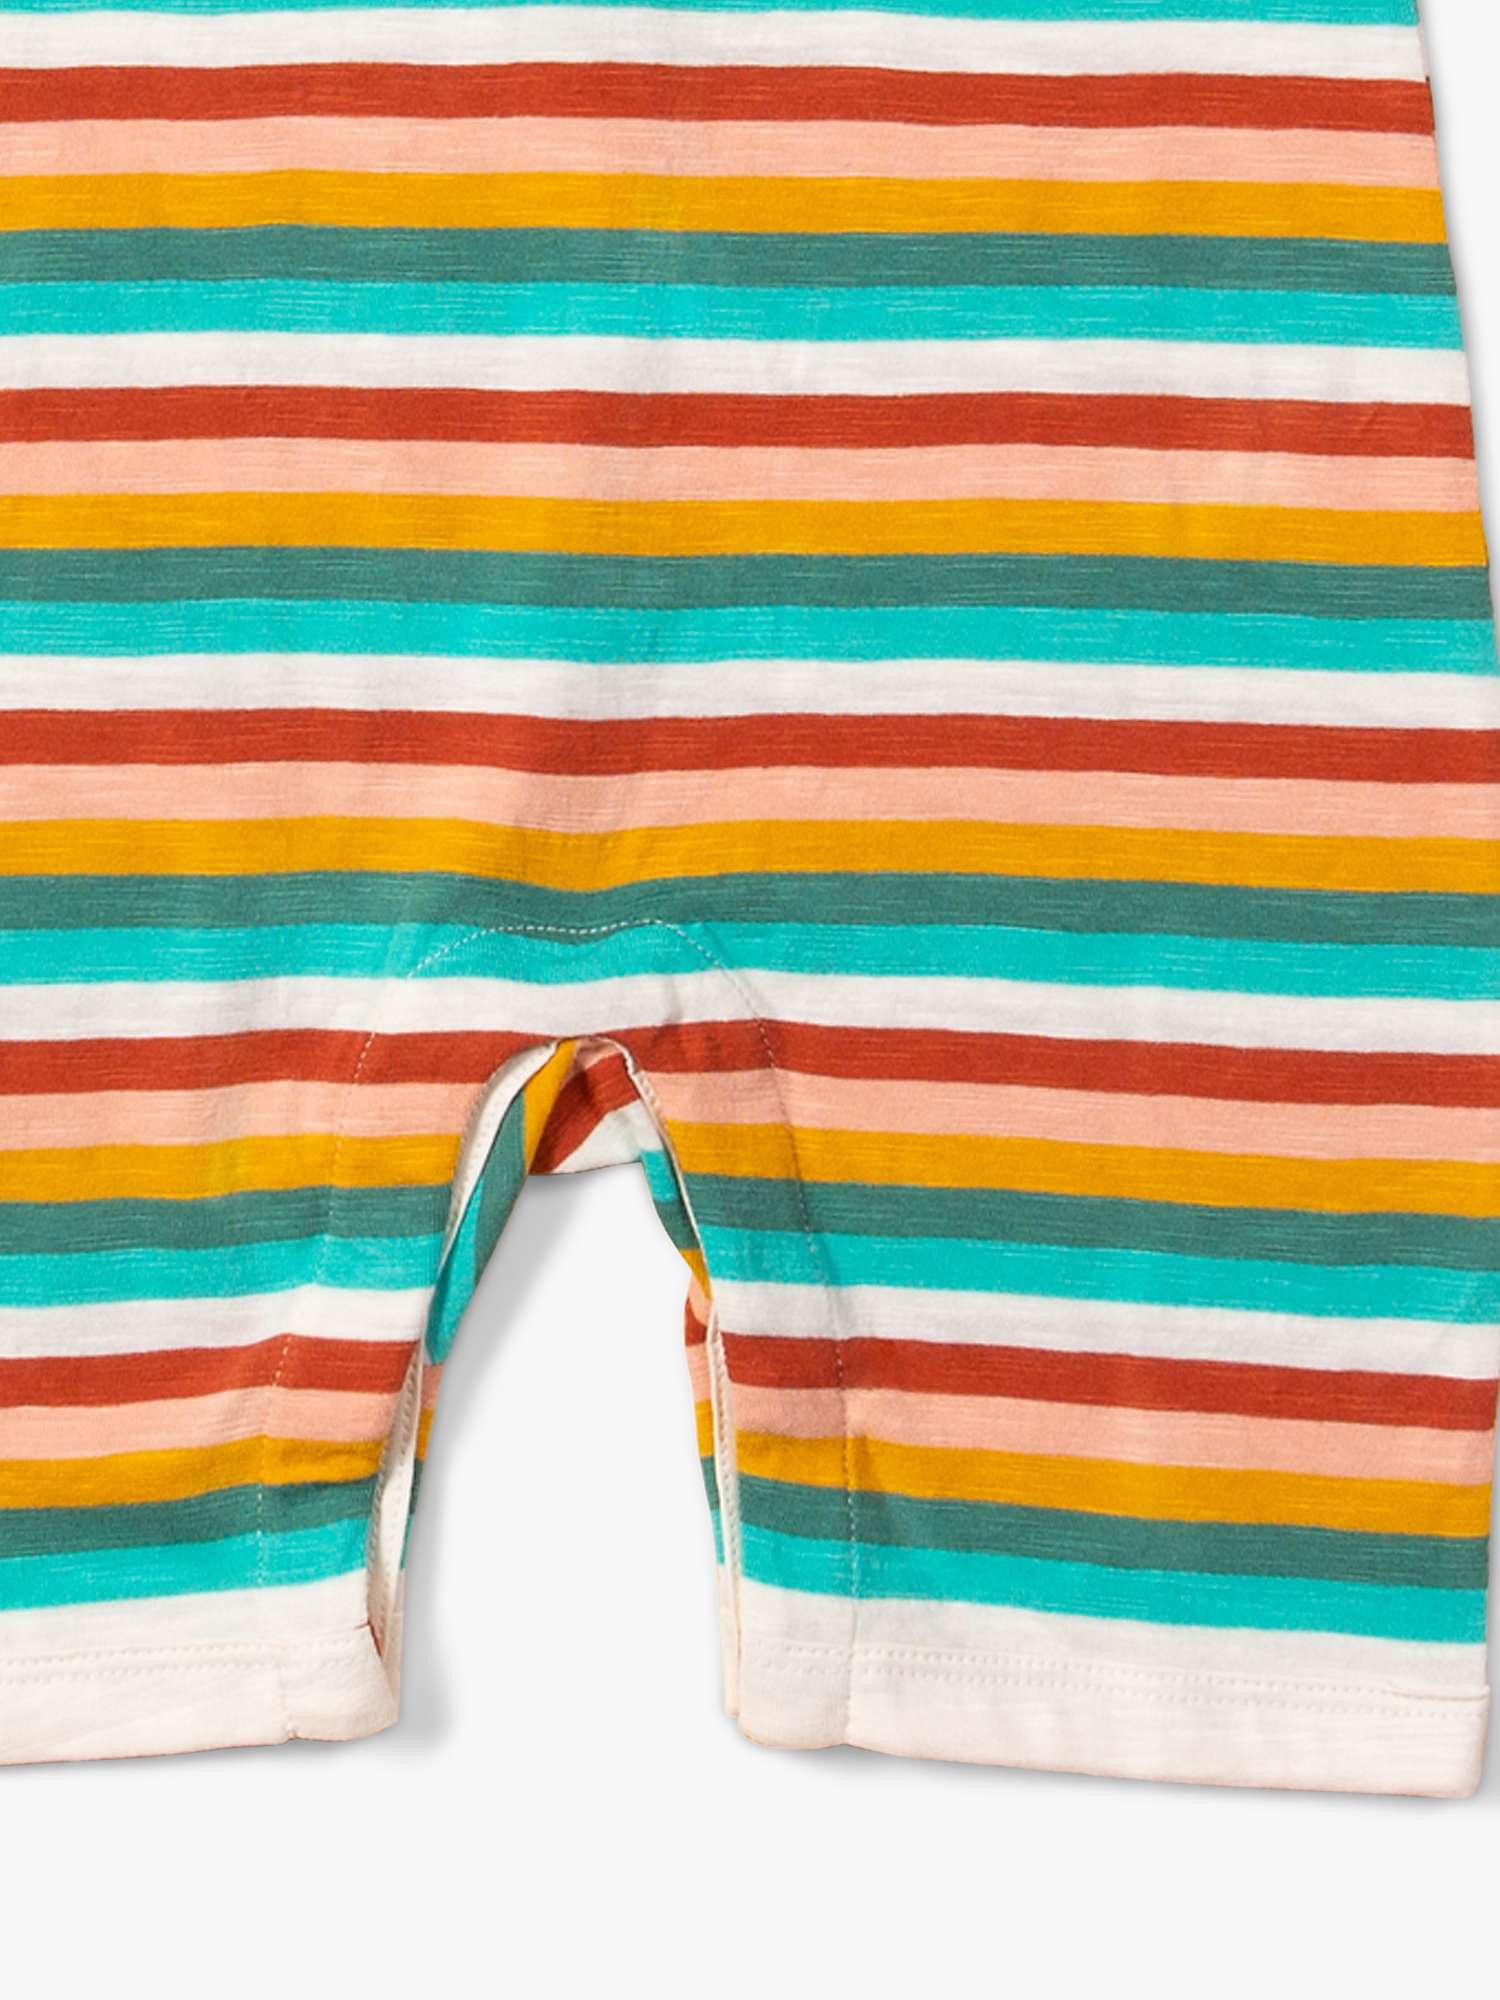 Buy Little Green Radicals Baby Organic Cotton Striped Rainbow Summer Romper, Multi Online at johnlewis.com